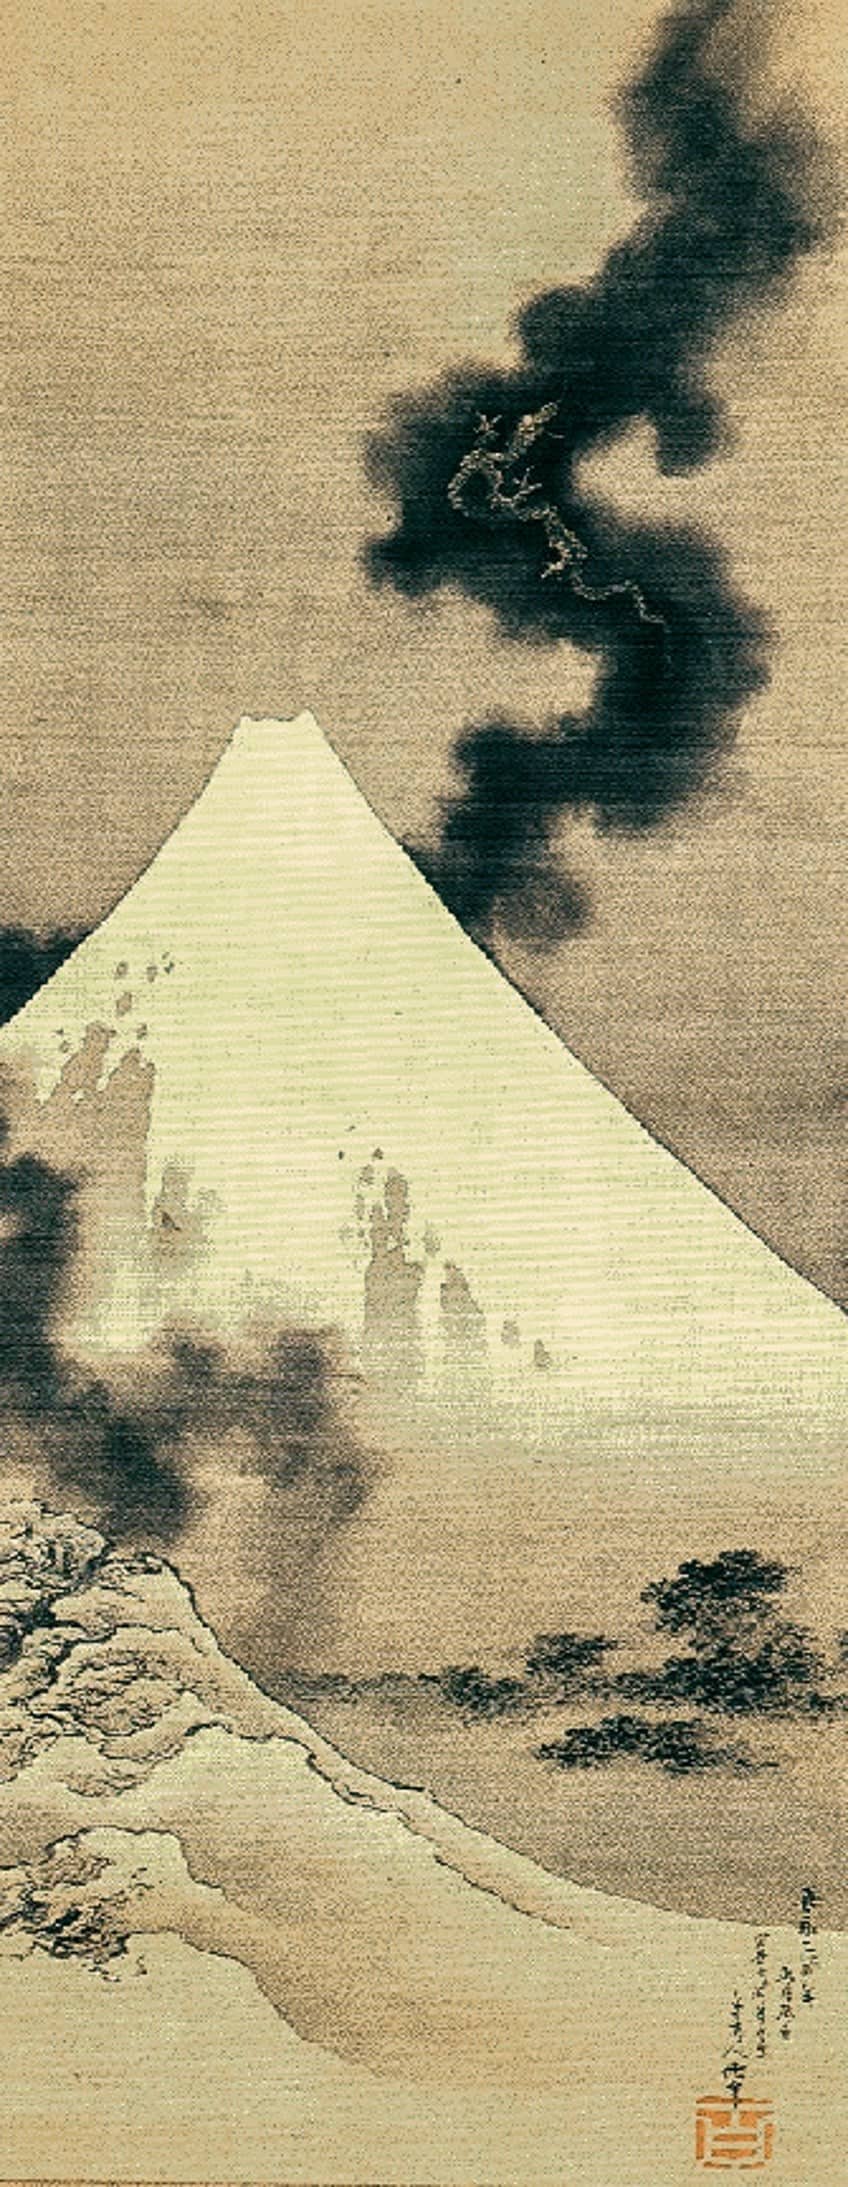 Späte Hokusai-Gemälde